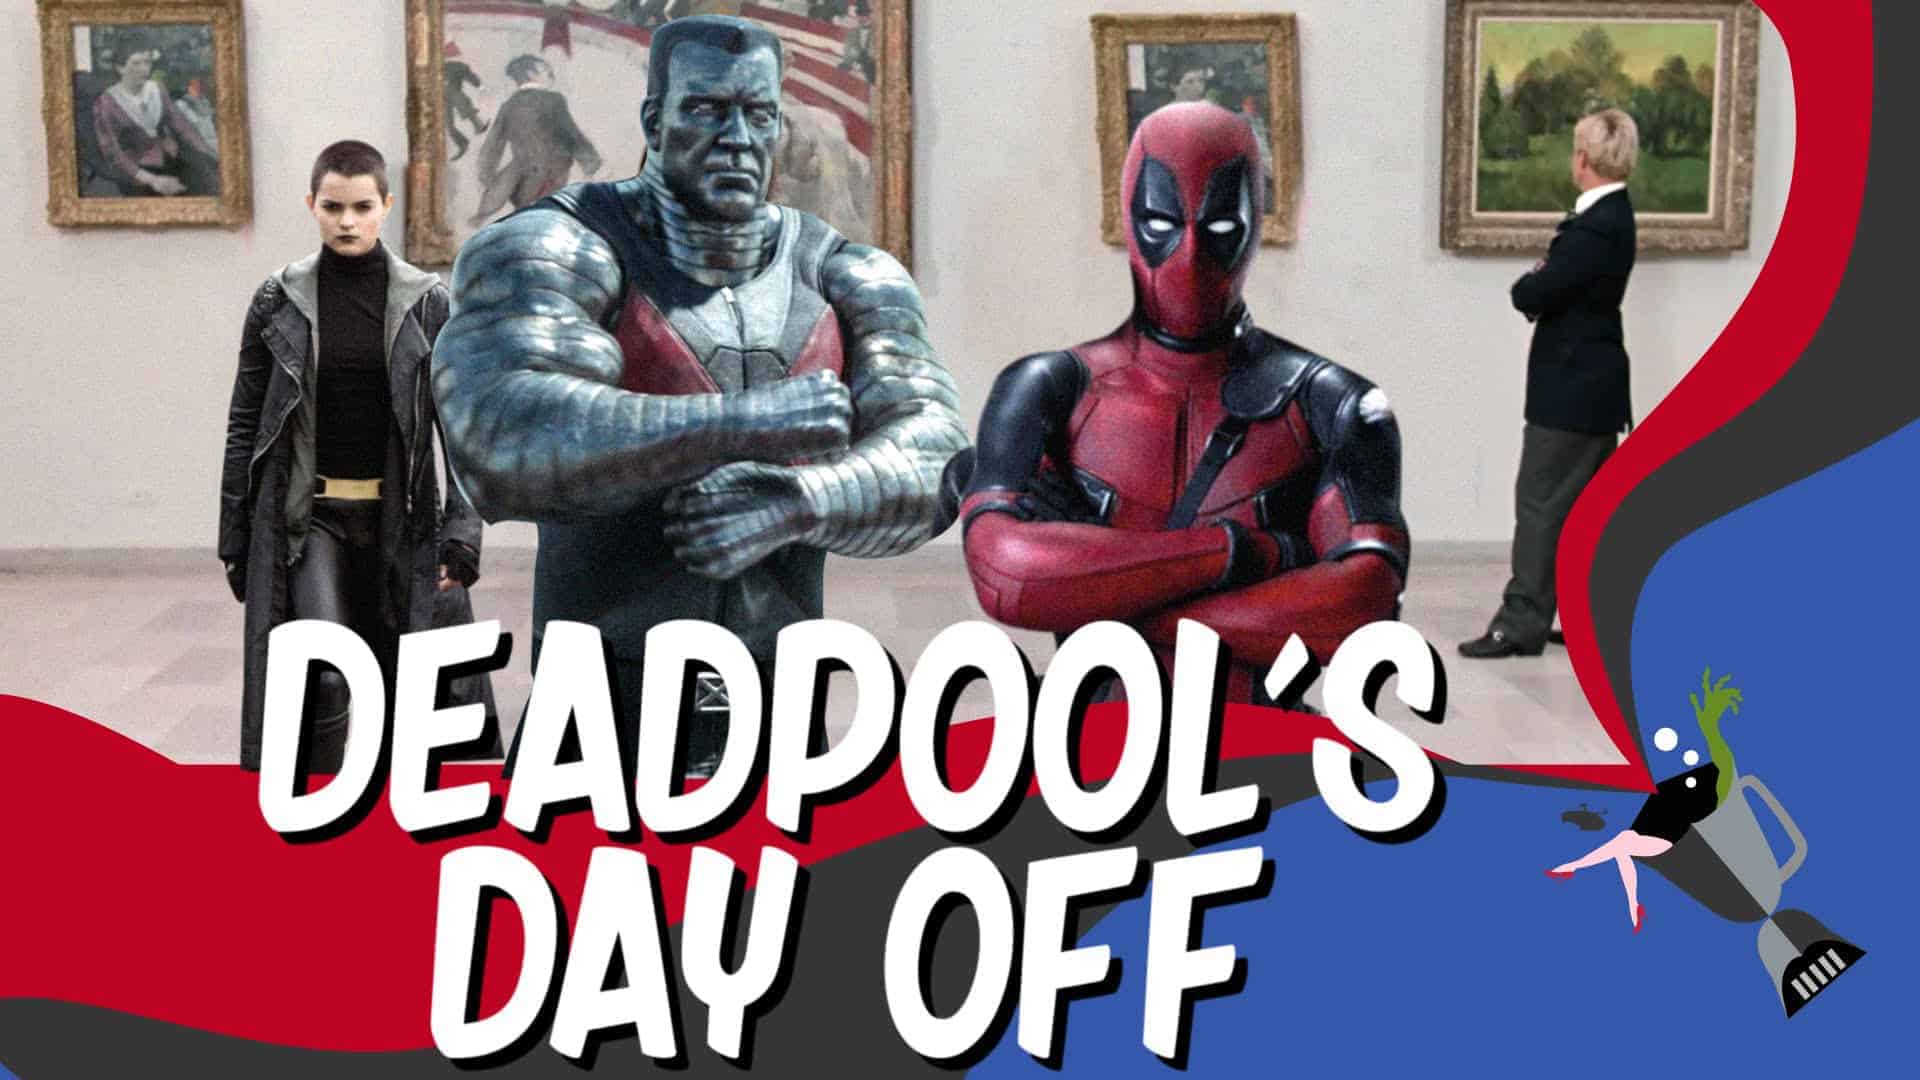 Deadpool's Day Off